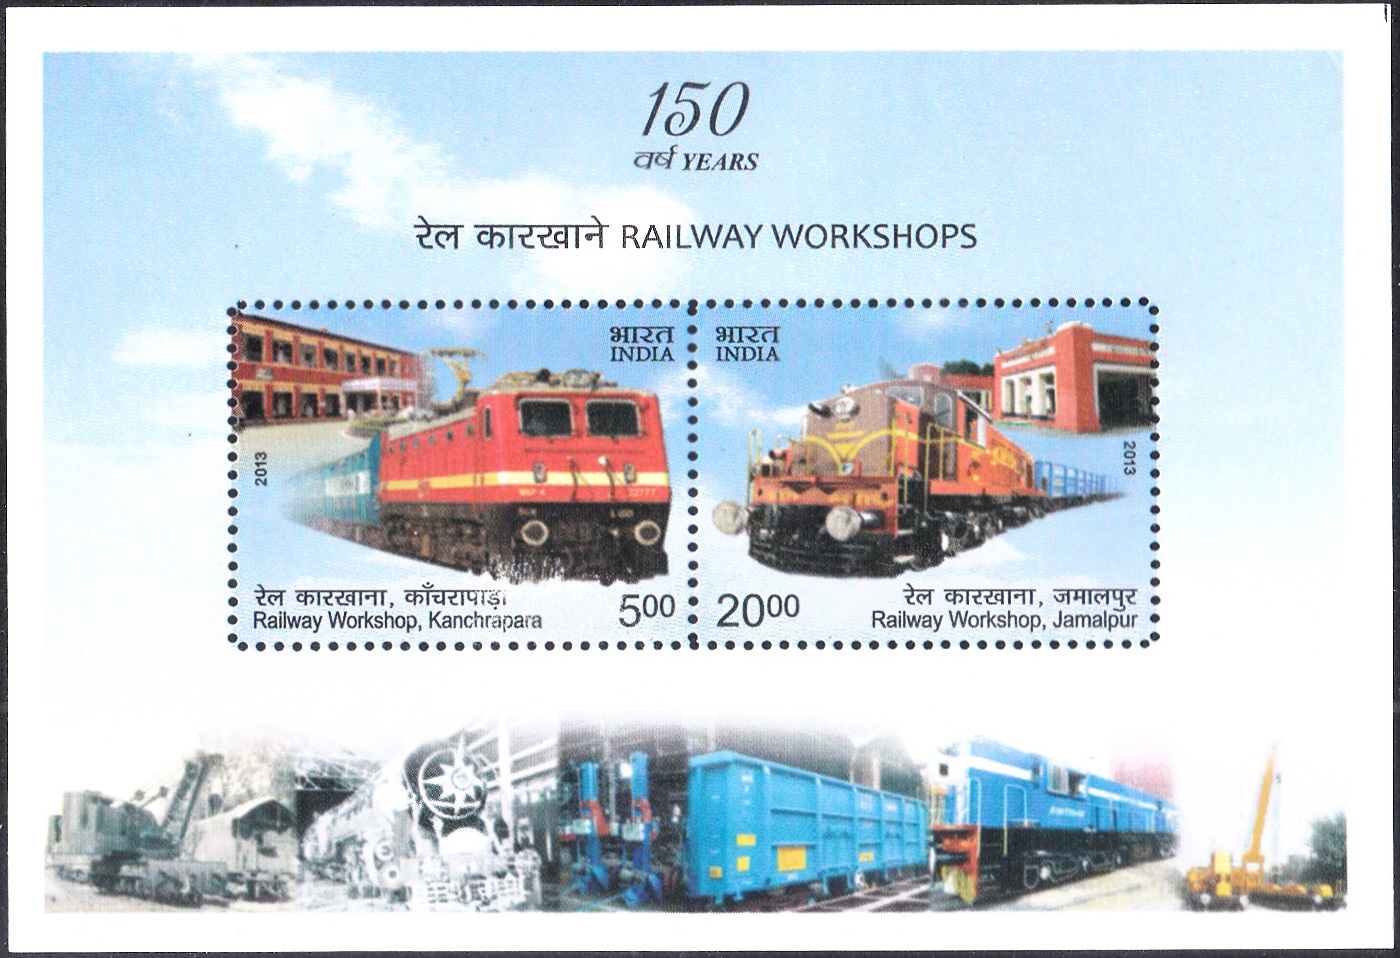 Kanchrapara Railway Workshop & Jamalpur Locomotive Workshop